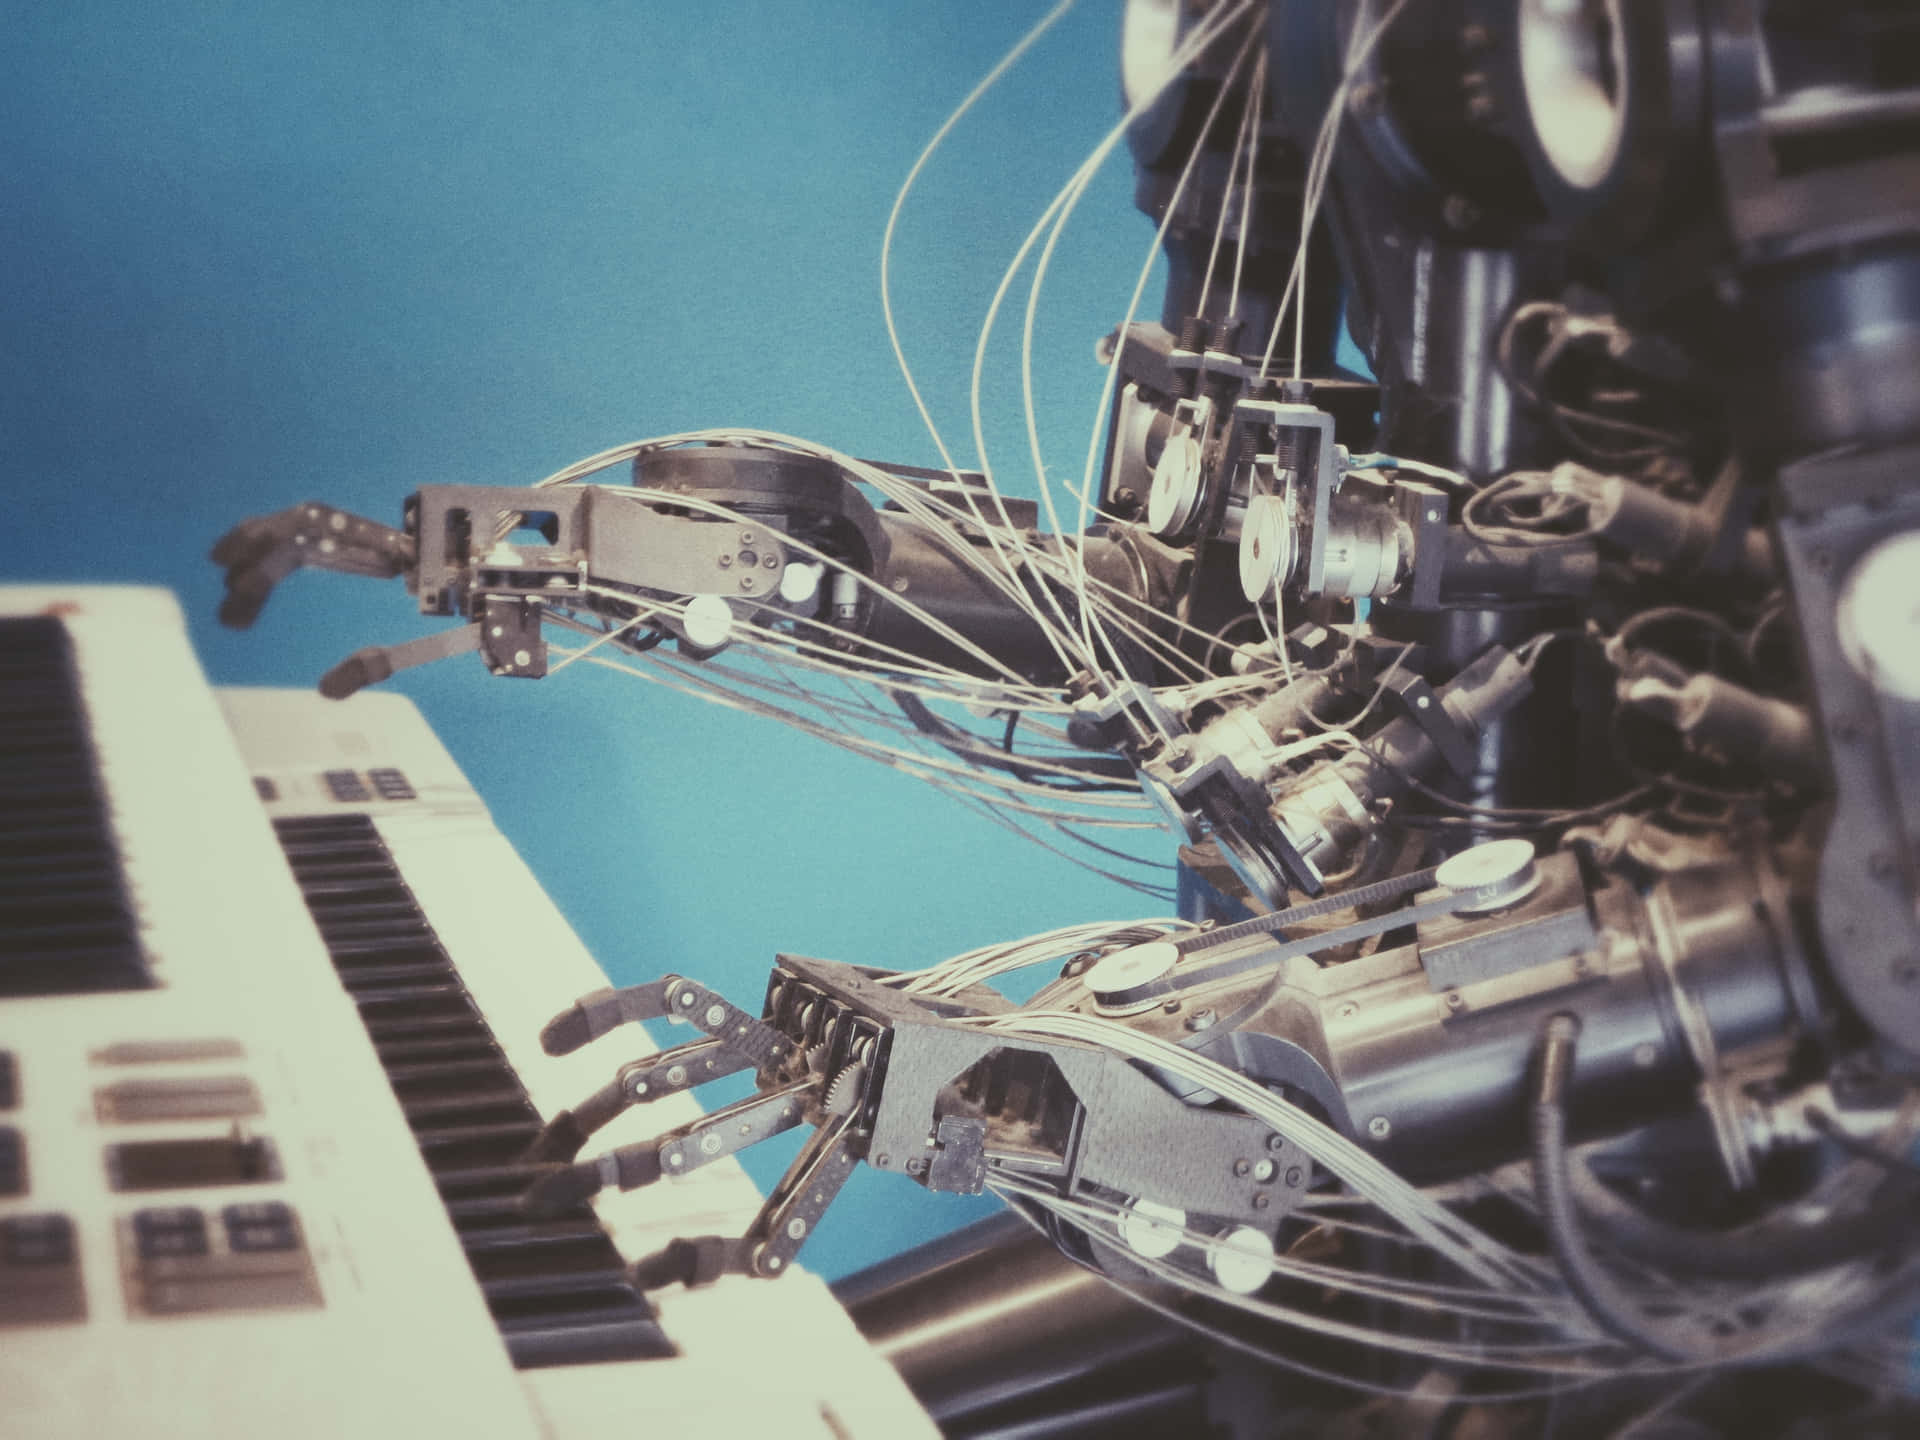 Robotder Spiller Klaver Teknologi Baggrund.